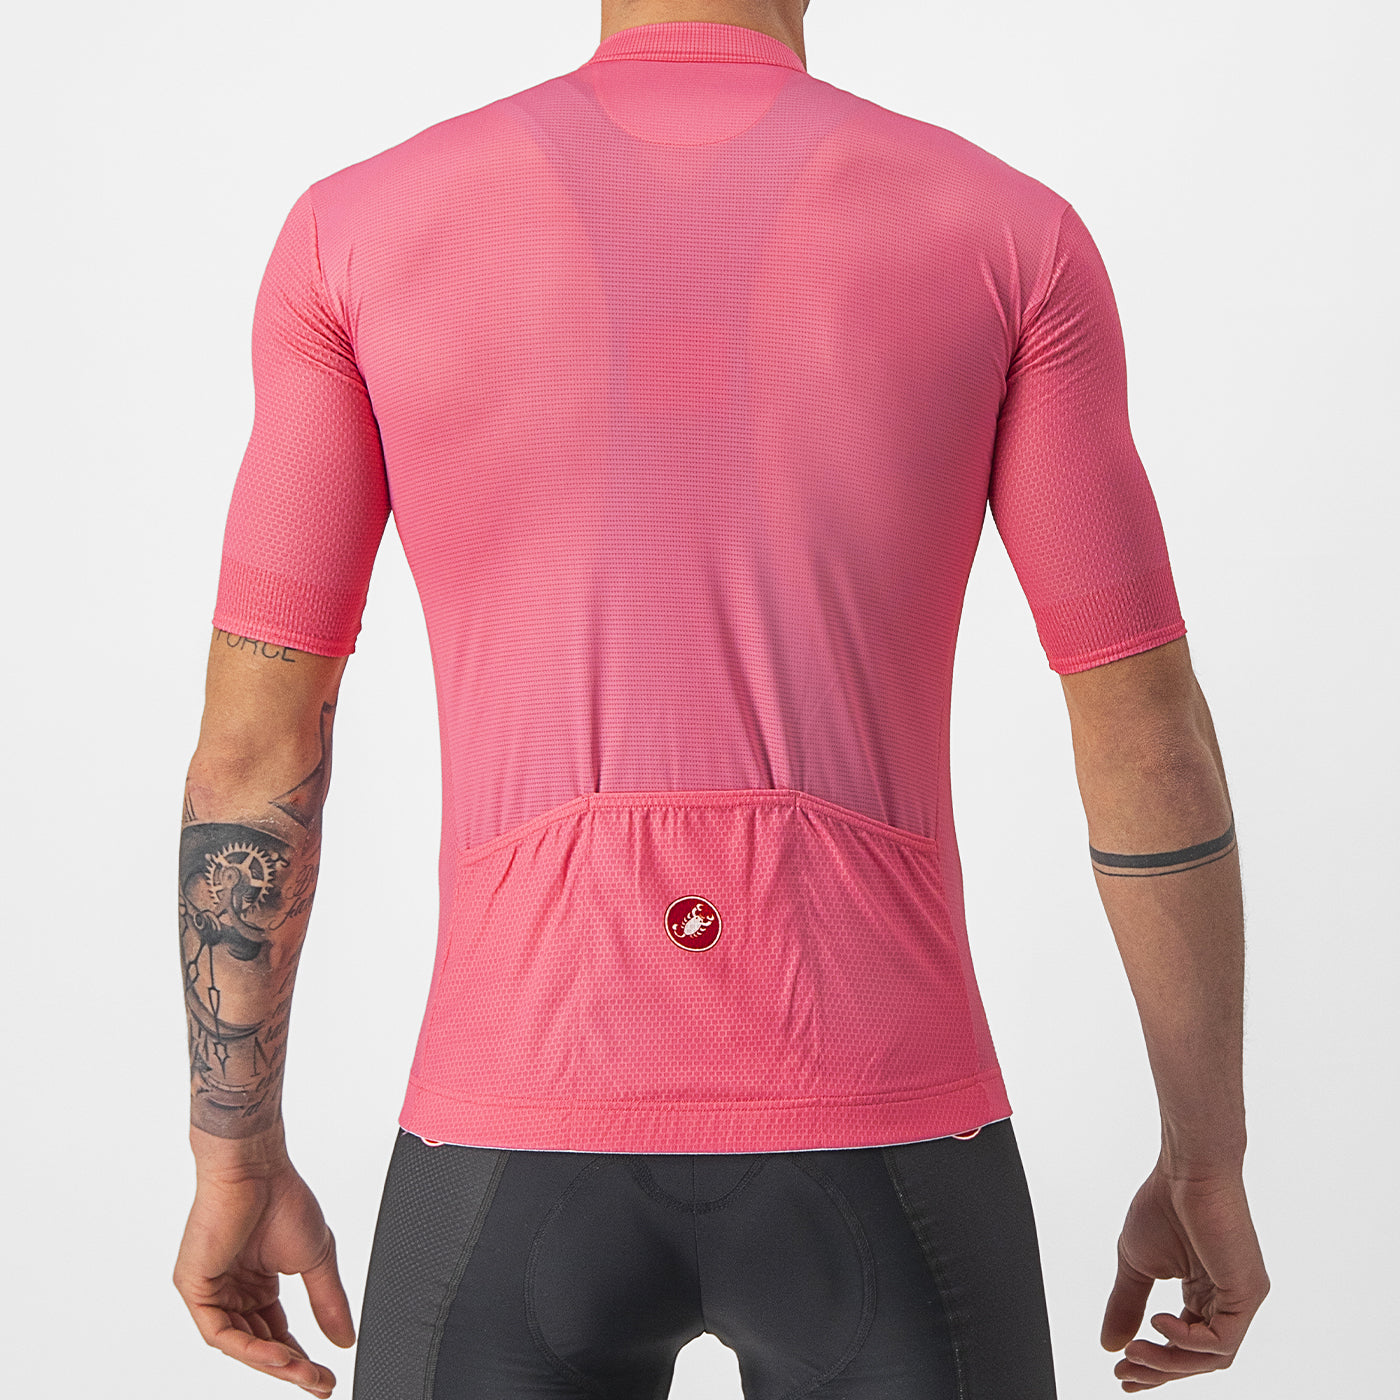 Castelli Fuori Giro trikot - Pink 